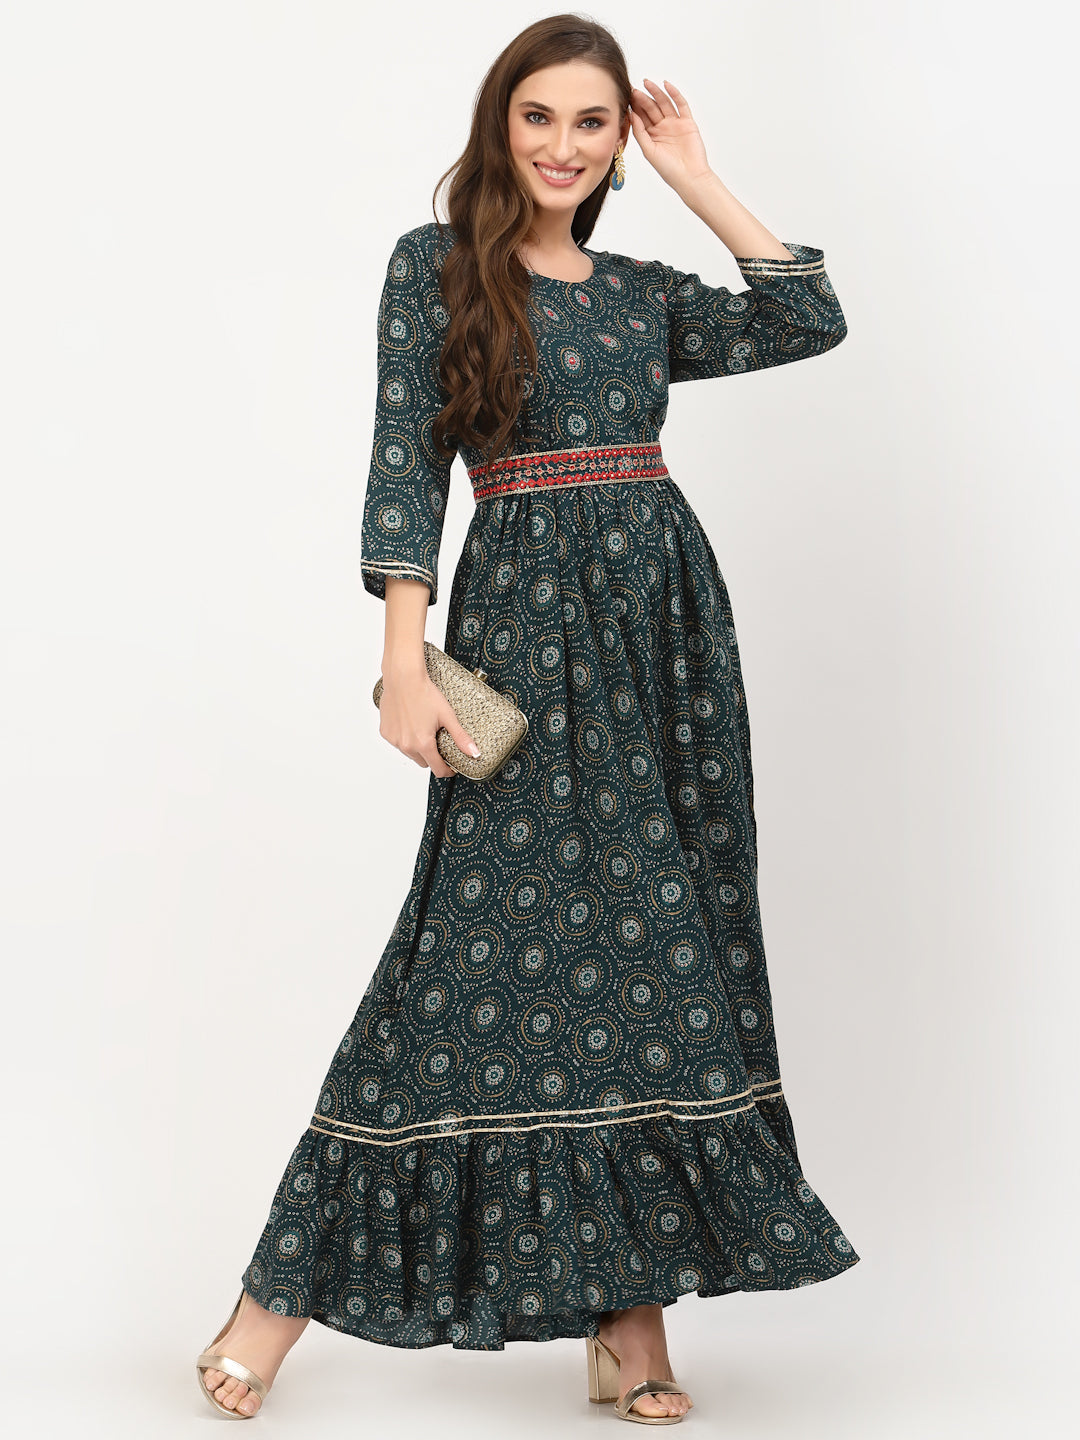 Teal Bandhani Printed Ruffled Dress With Tie Up Belt - ARH1465G